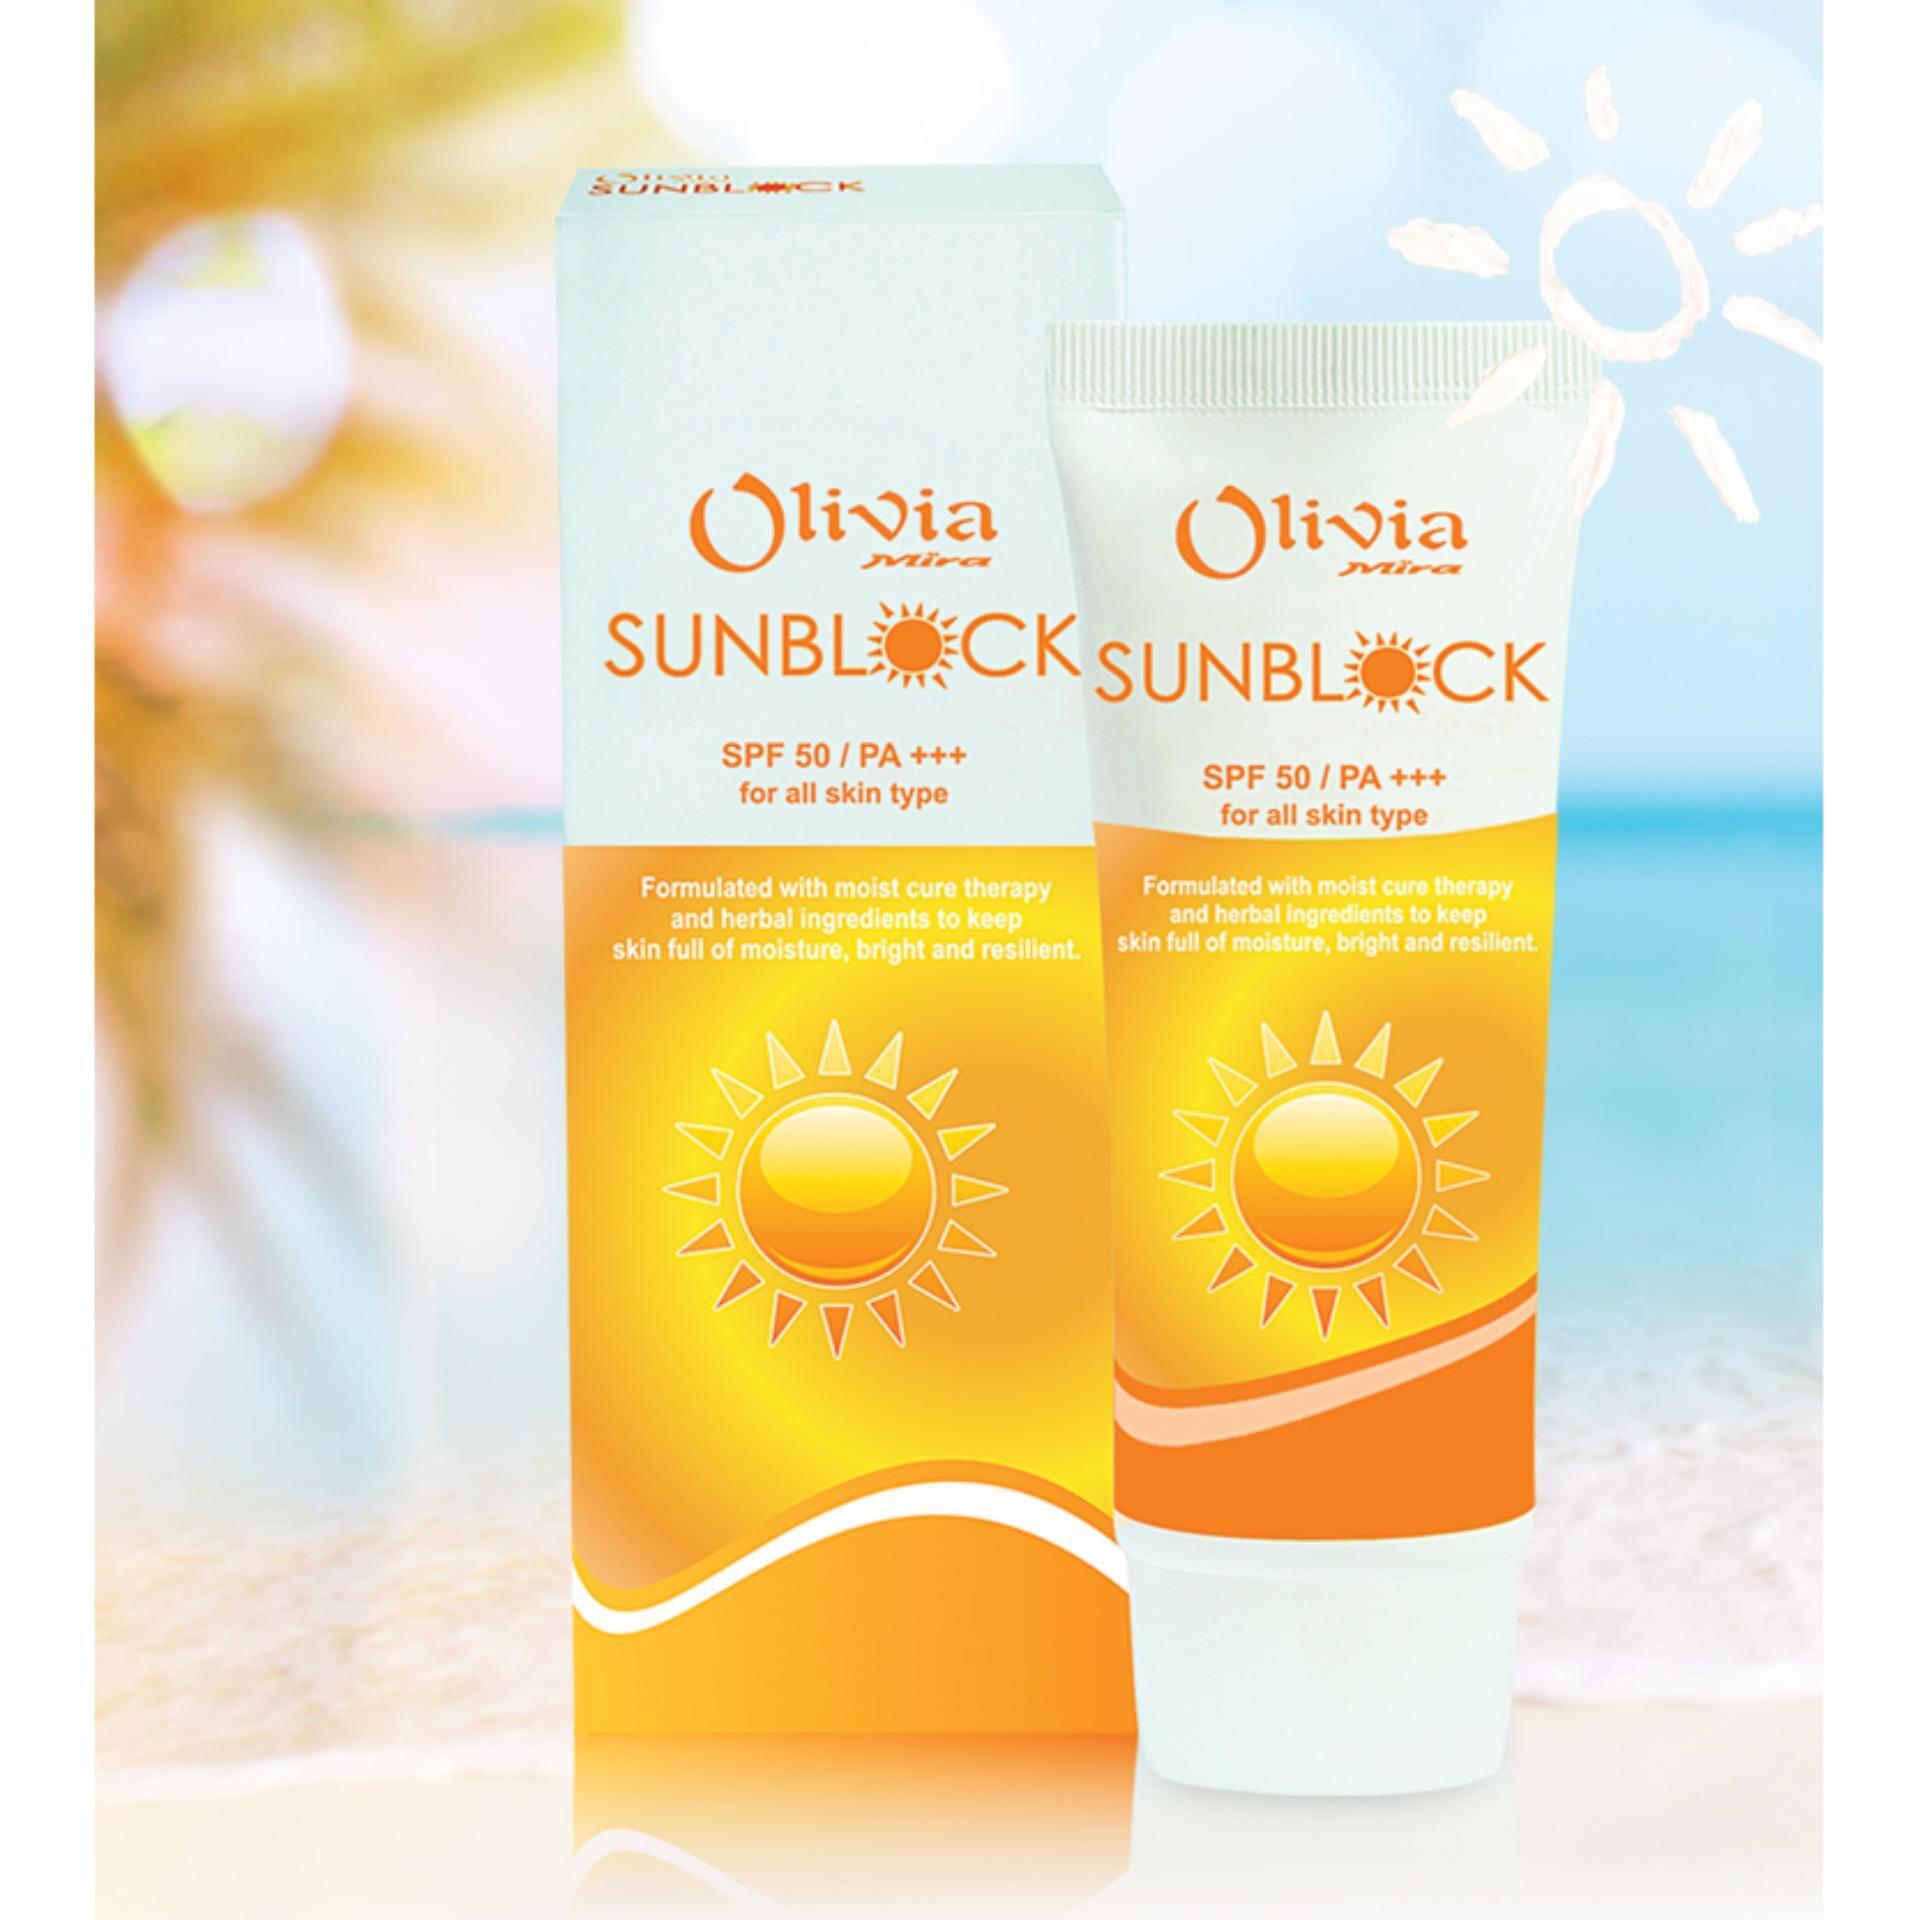 Kem chống nắng Olivia Mira Suncream 60ml